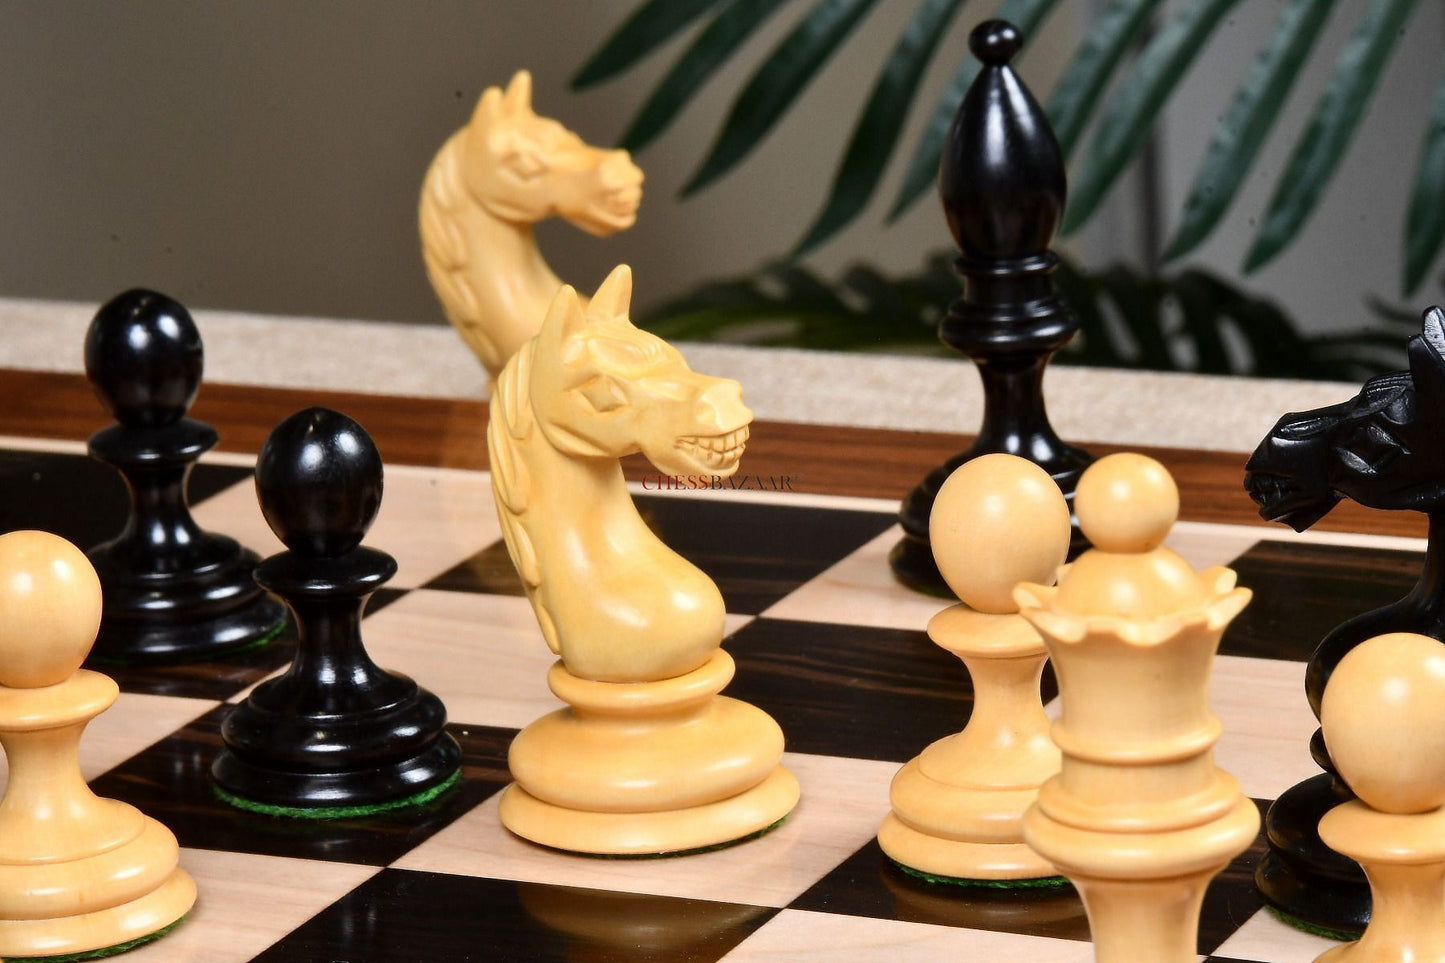 1935 Botvinnik Flohr Reproduced Soviet Chess Pieces in Ebony / Box Wood - 4" King